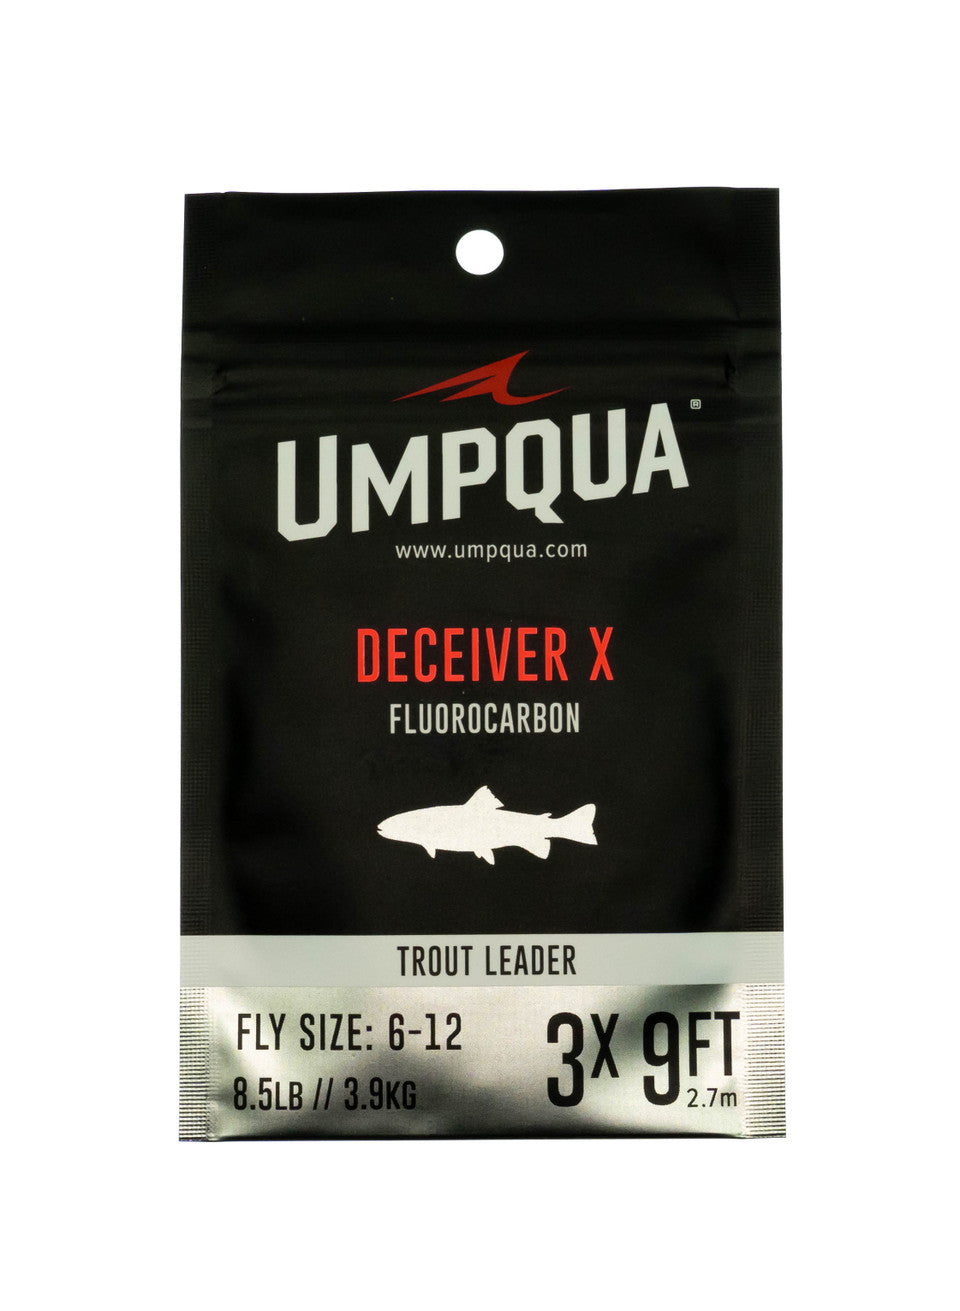 Umpqua Deceiver X Fluorocarbon 9' Leader